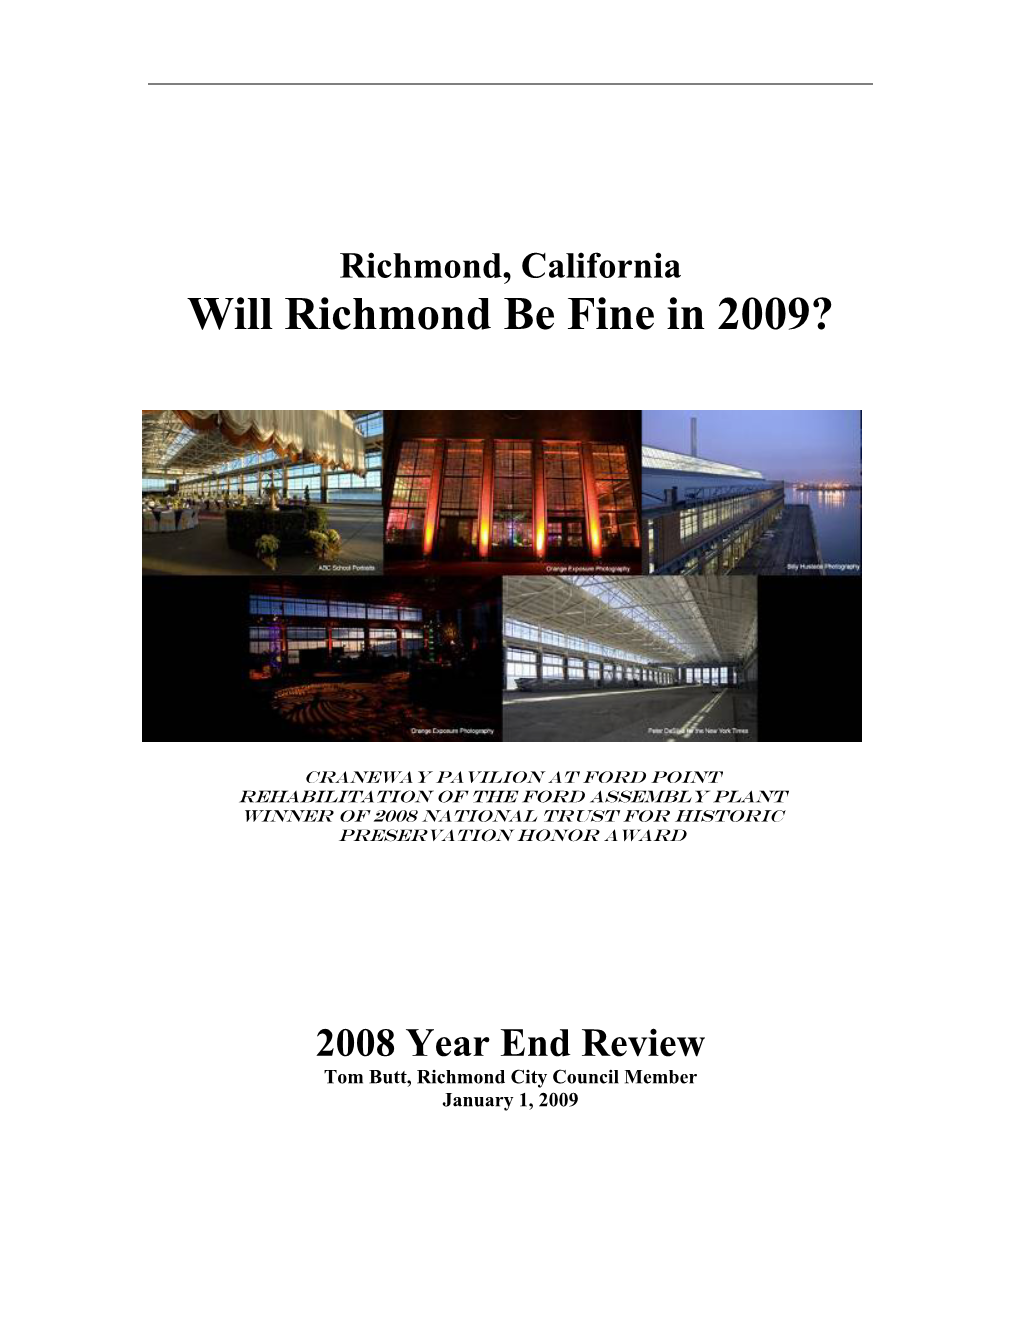 Will Richmond Be Fine in 2009?